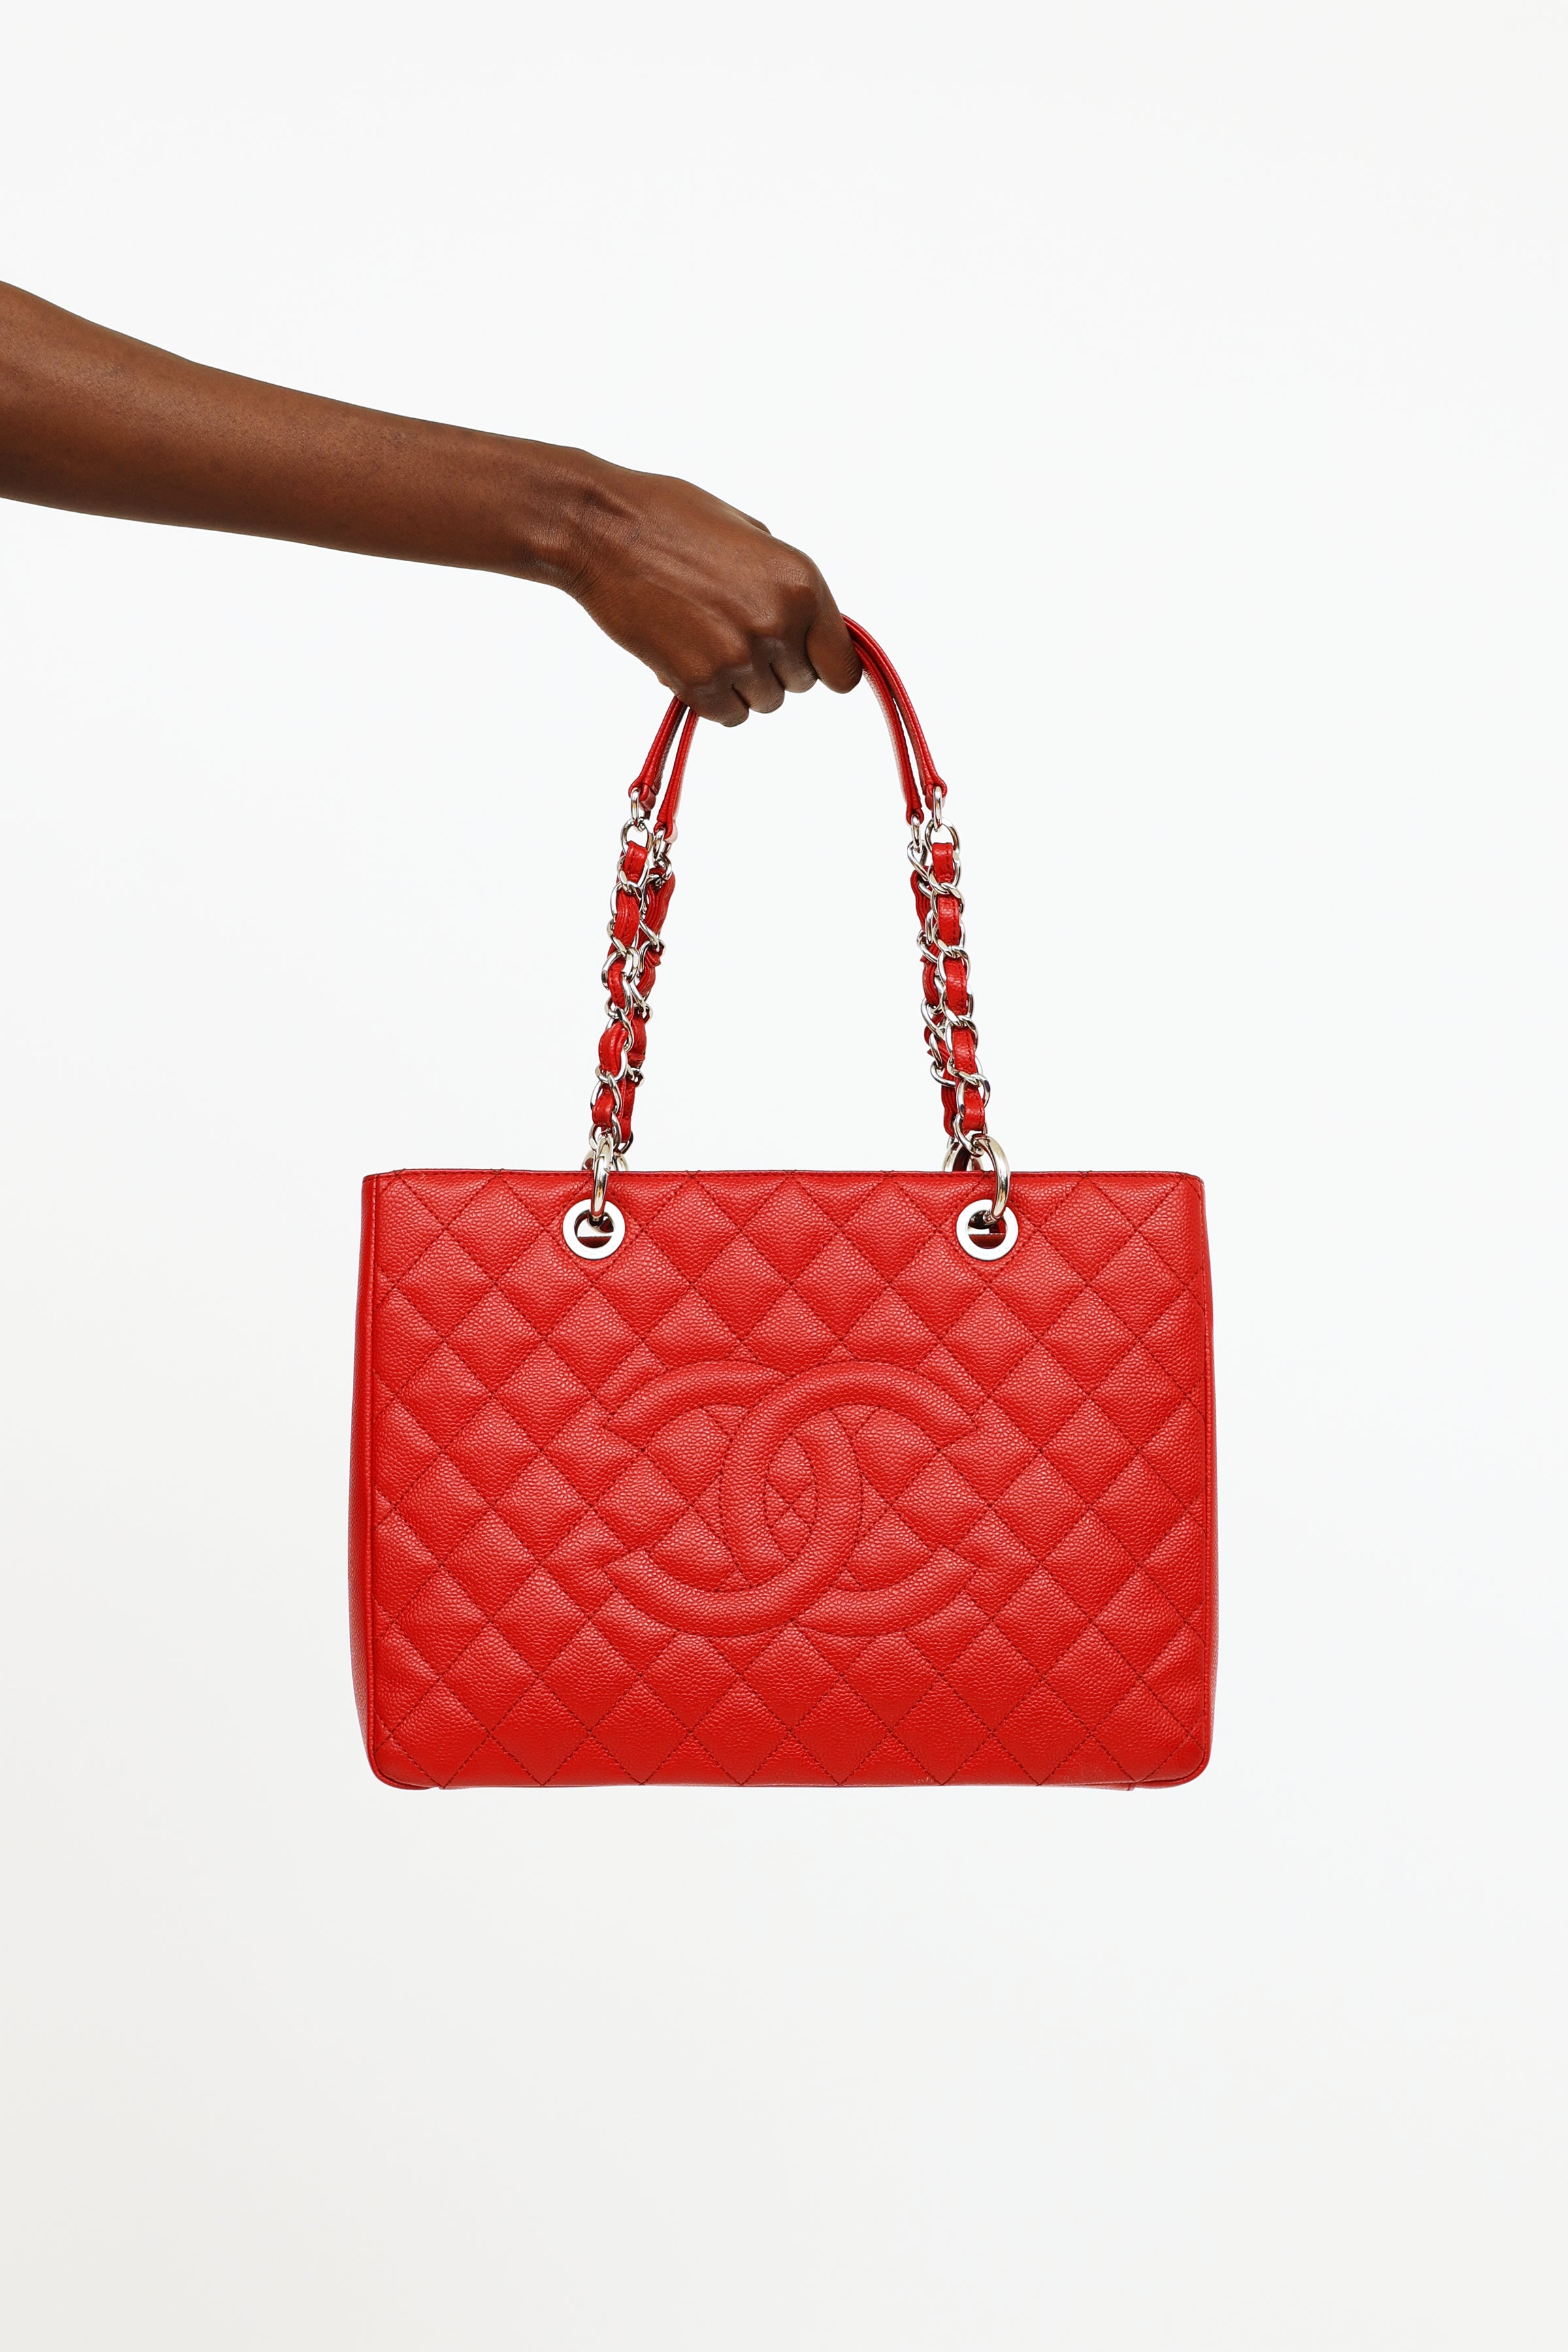 Chanel  2015 Red Caviar Grand Shopper Tote Bag  VSP Consignment